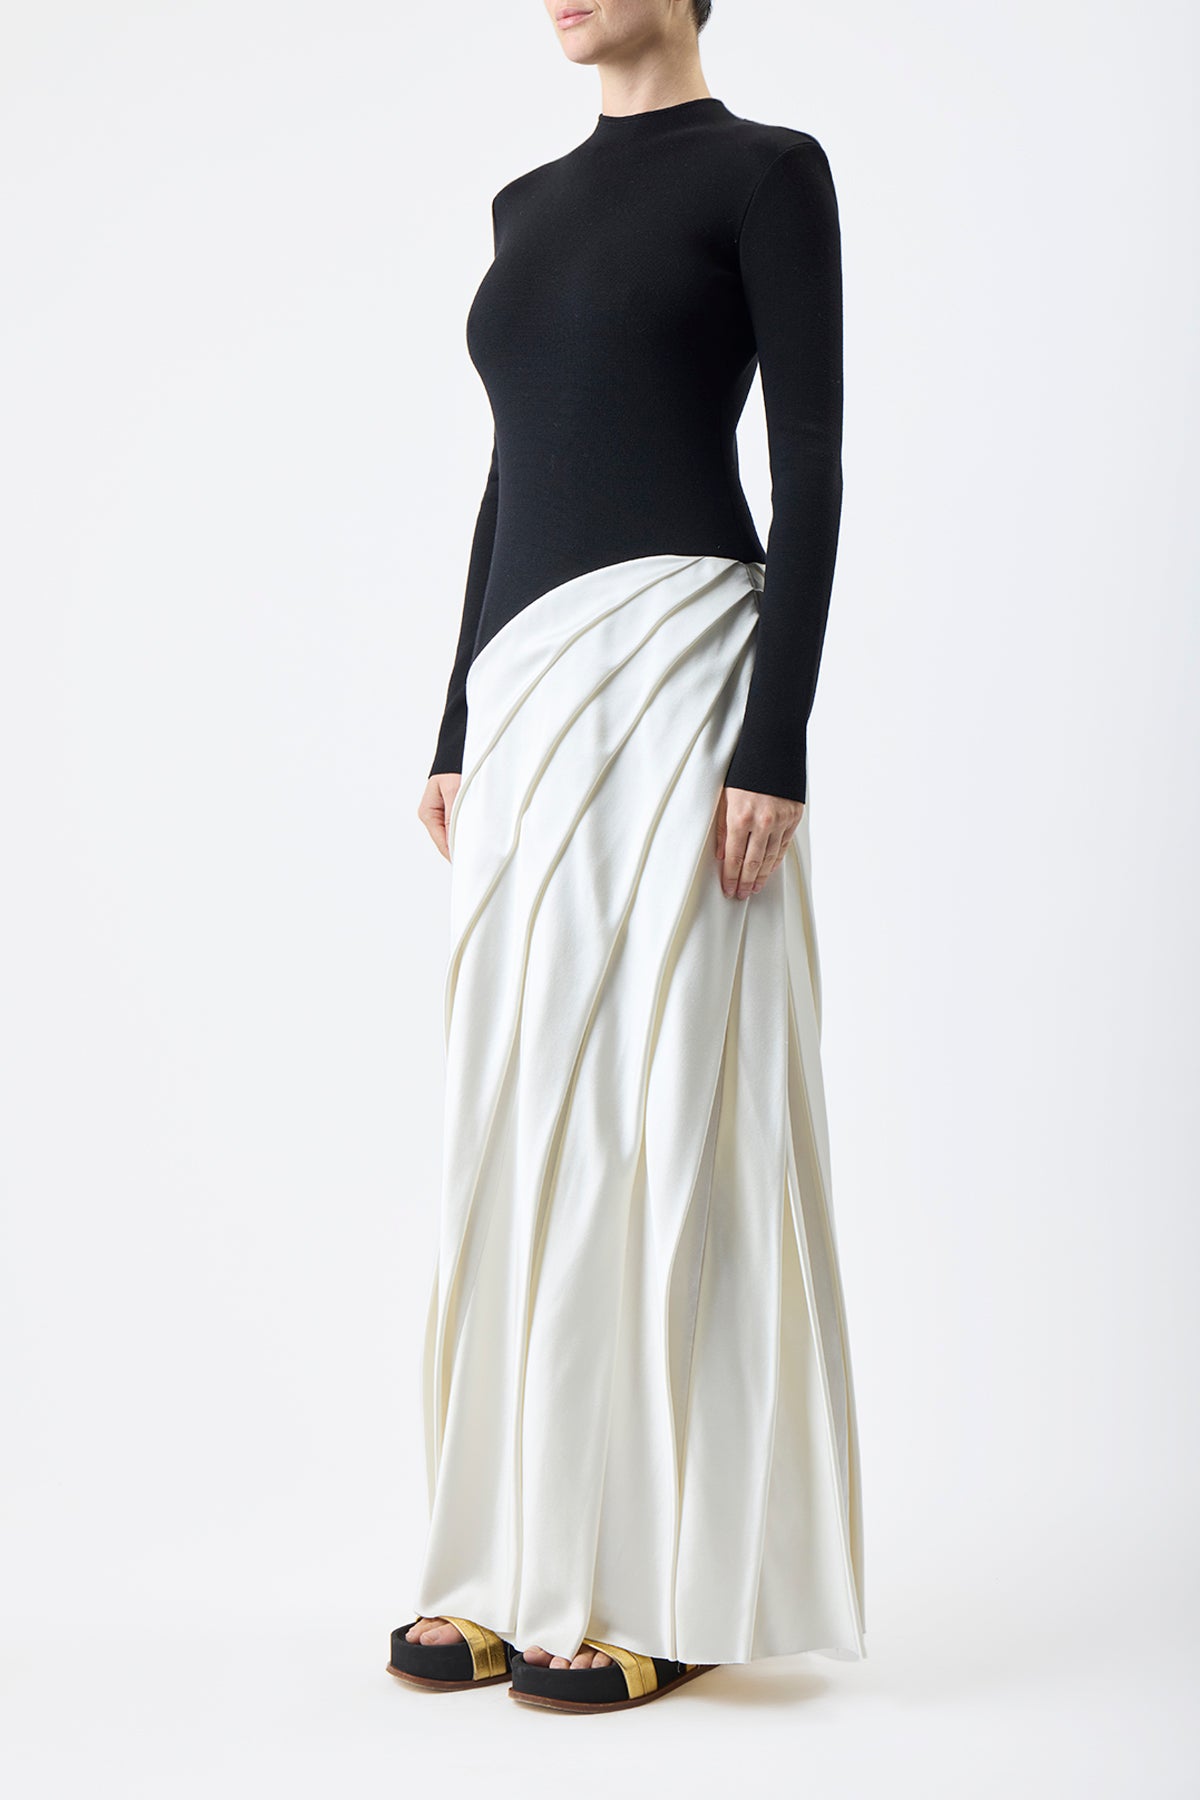 Ismay Pleated Dress in Black & Ivory Silk Satin